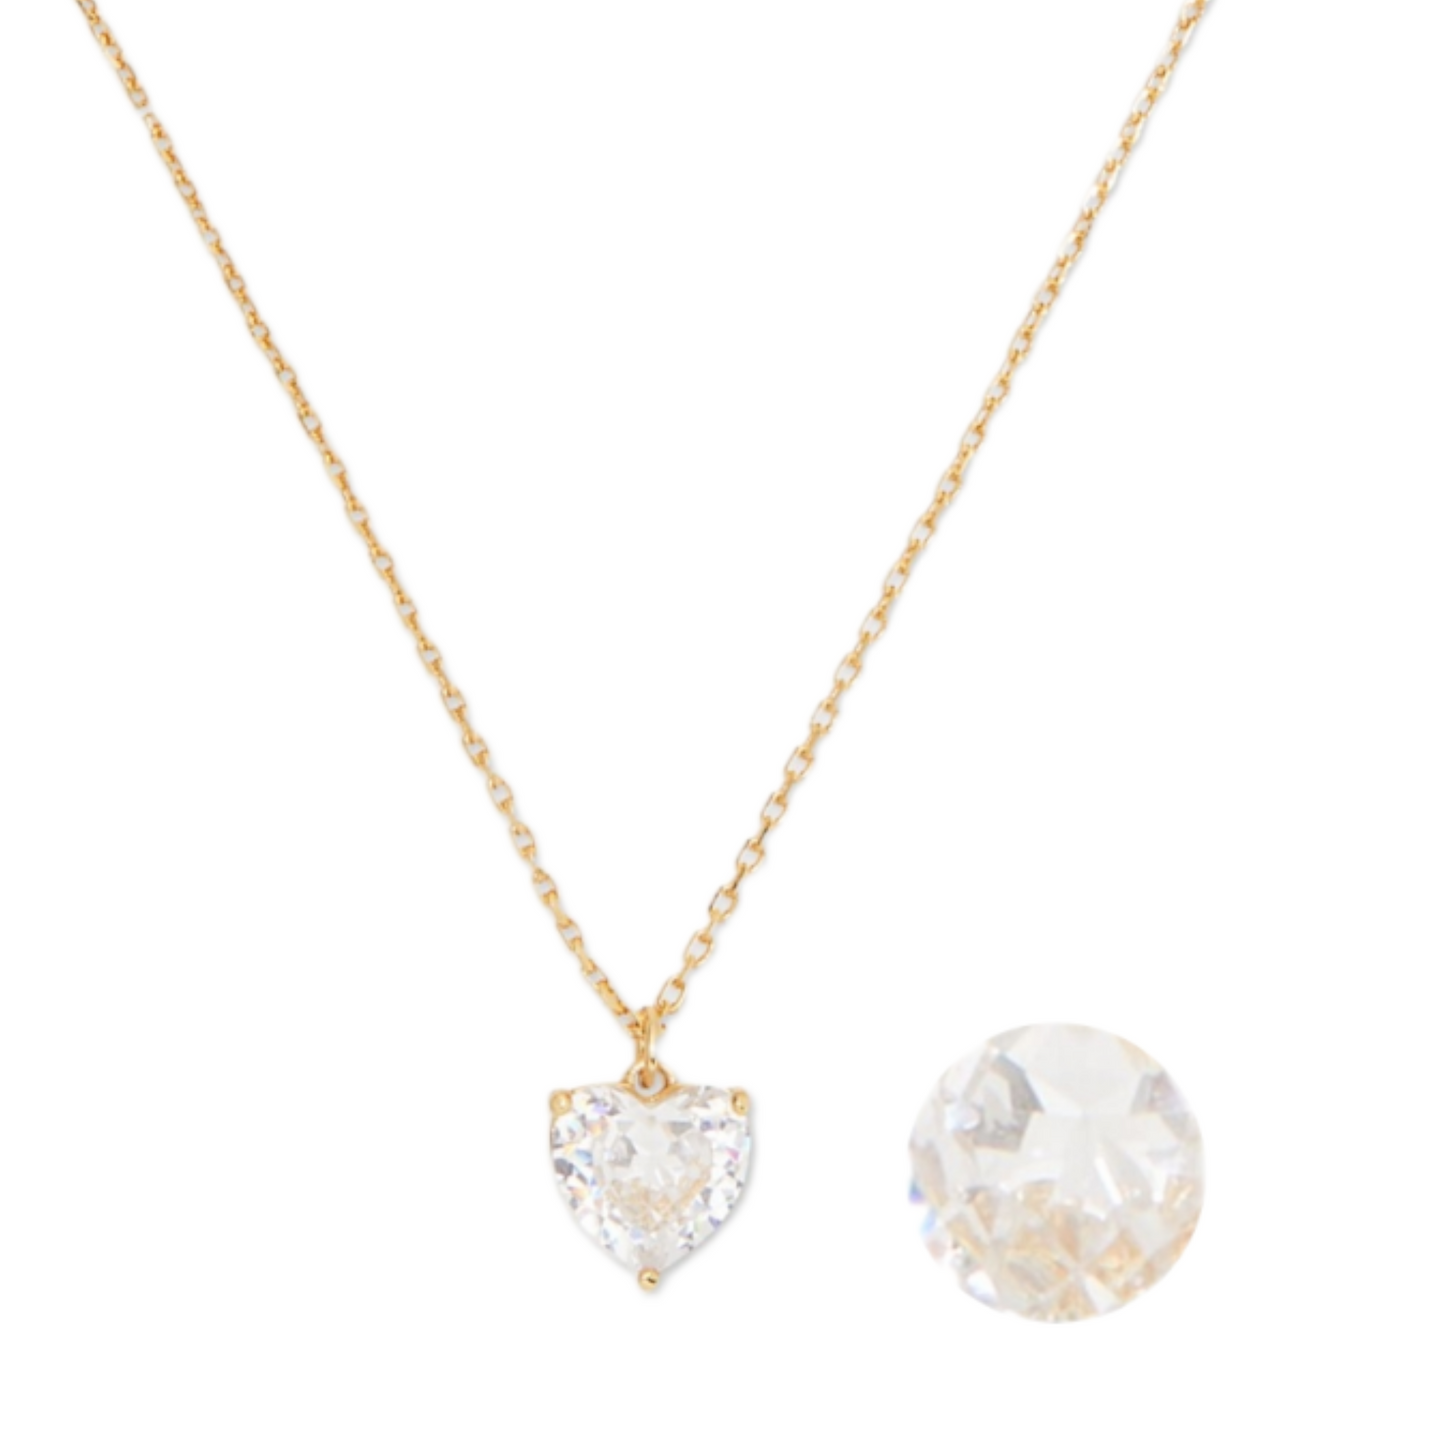 Kate Spade New York Gold-Tone Birthstone Heart Pendant Necklace, 16" + 3"
extender